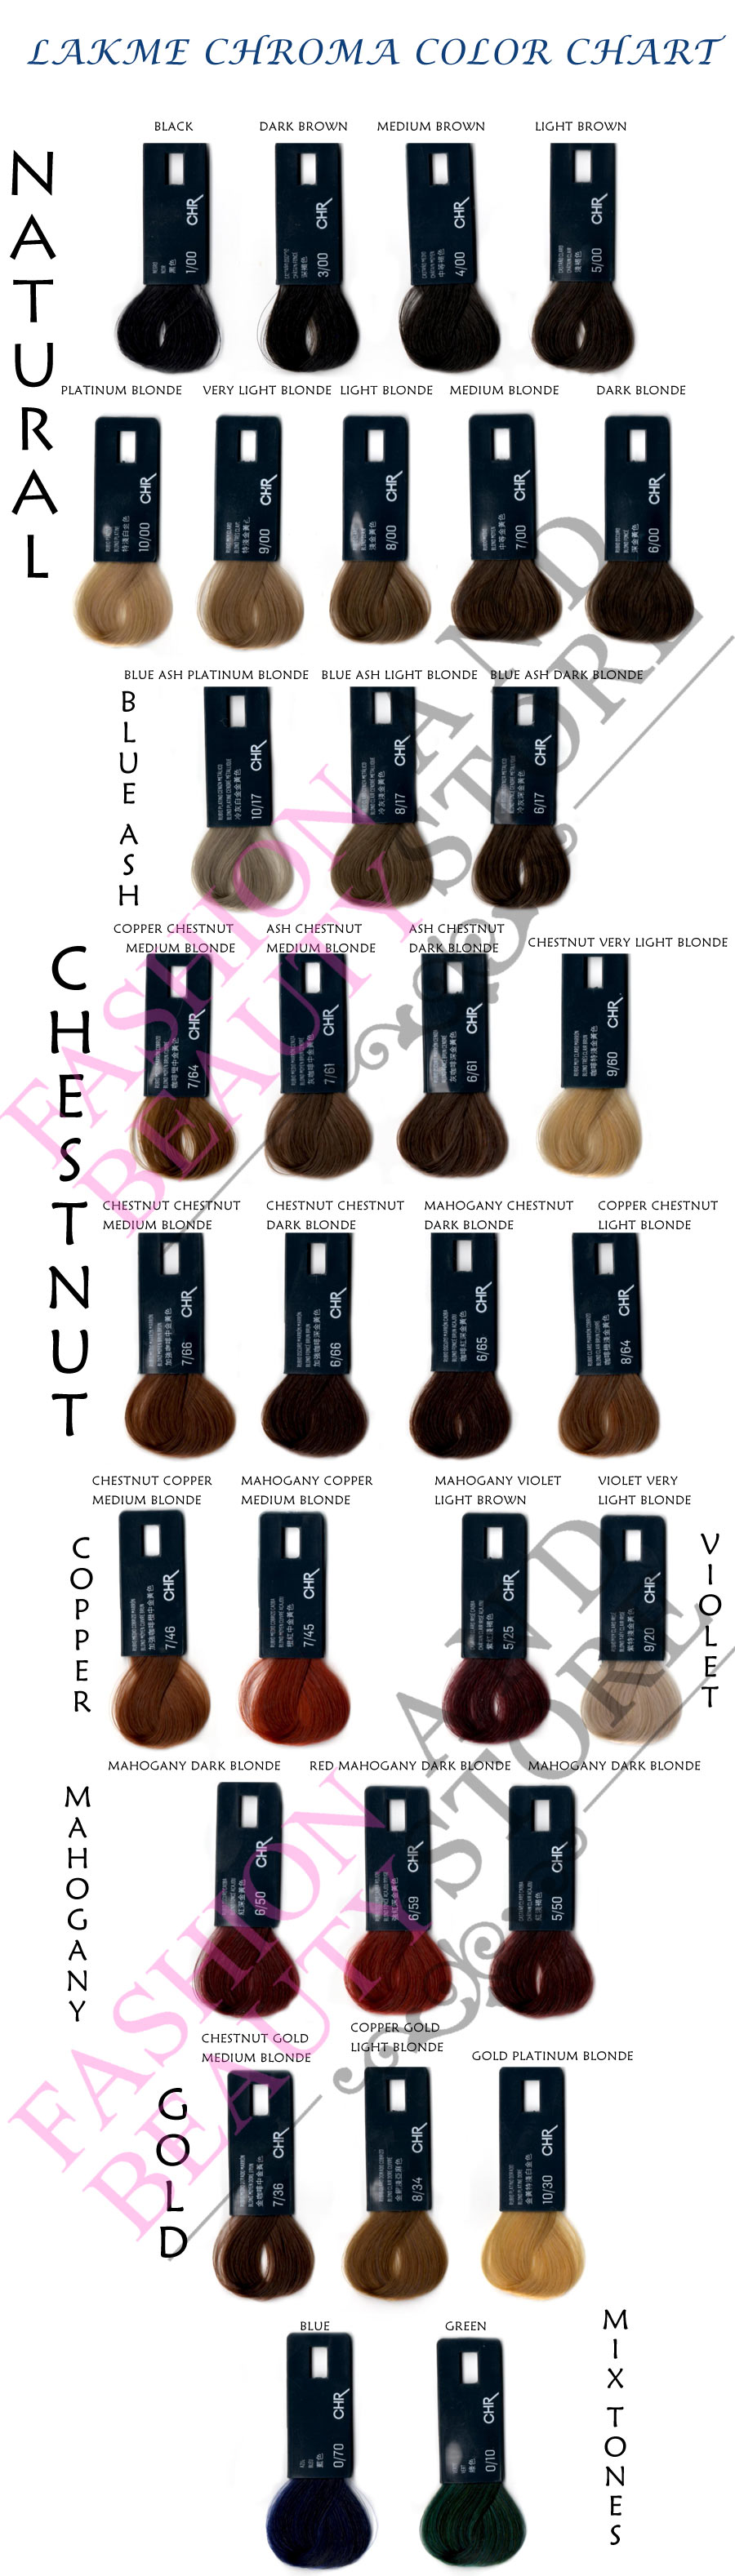 lakme chroma hair color chart - pravana chromasilk color chart amulette ...